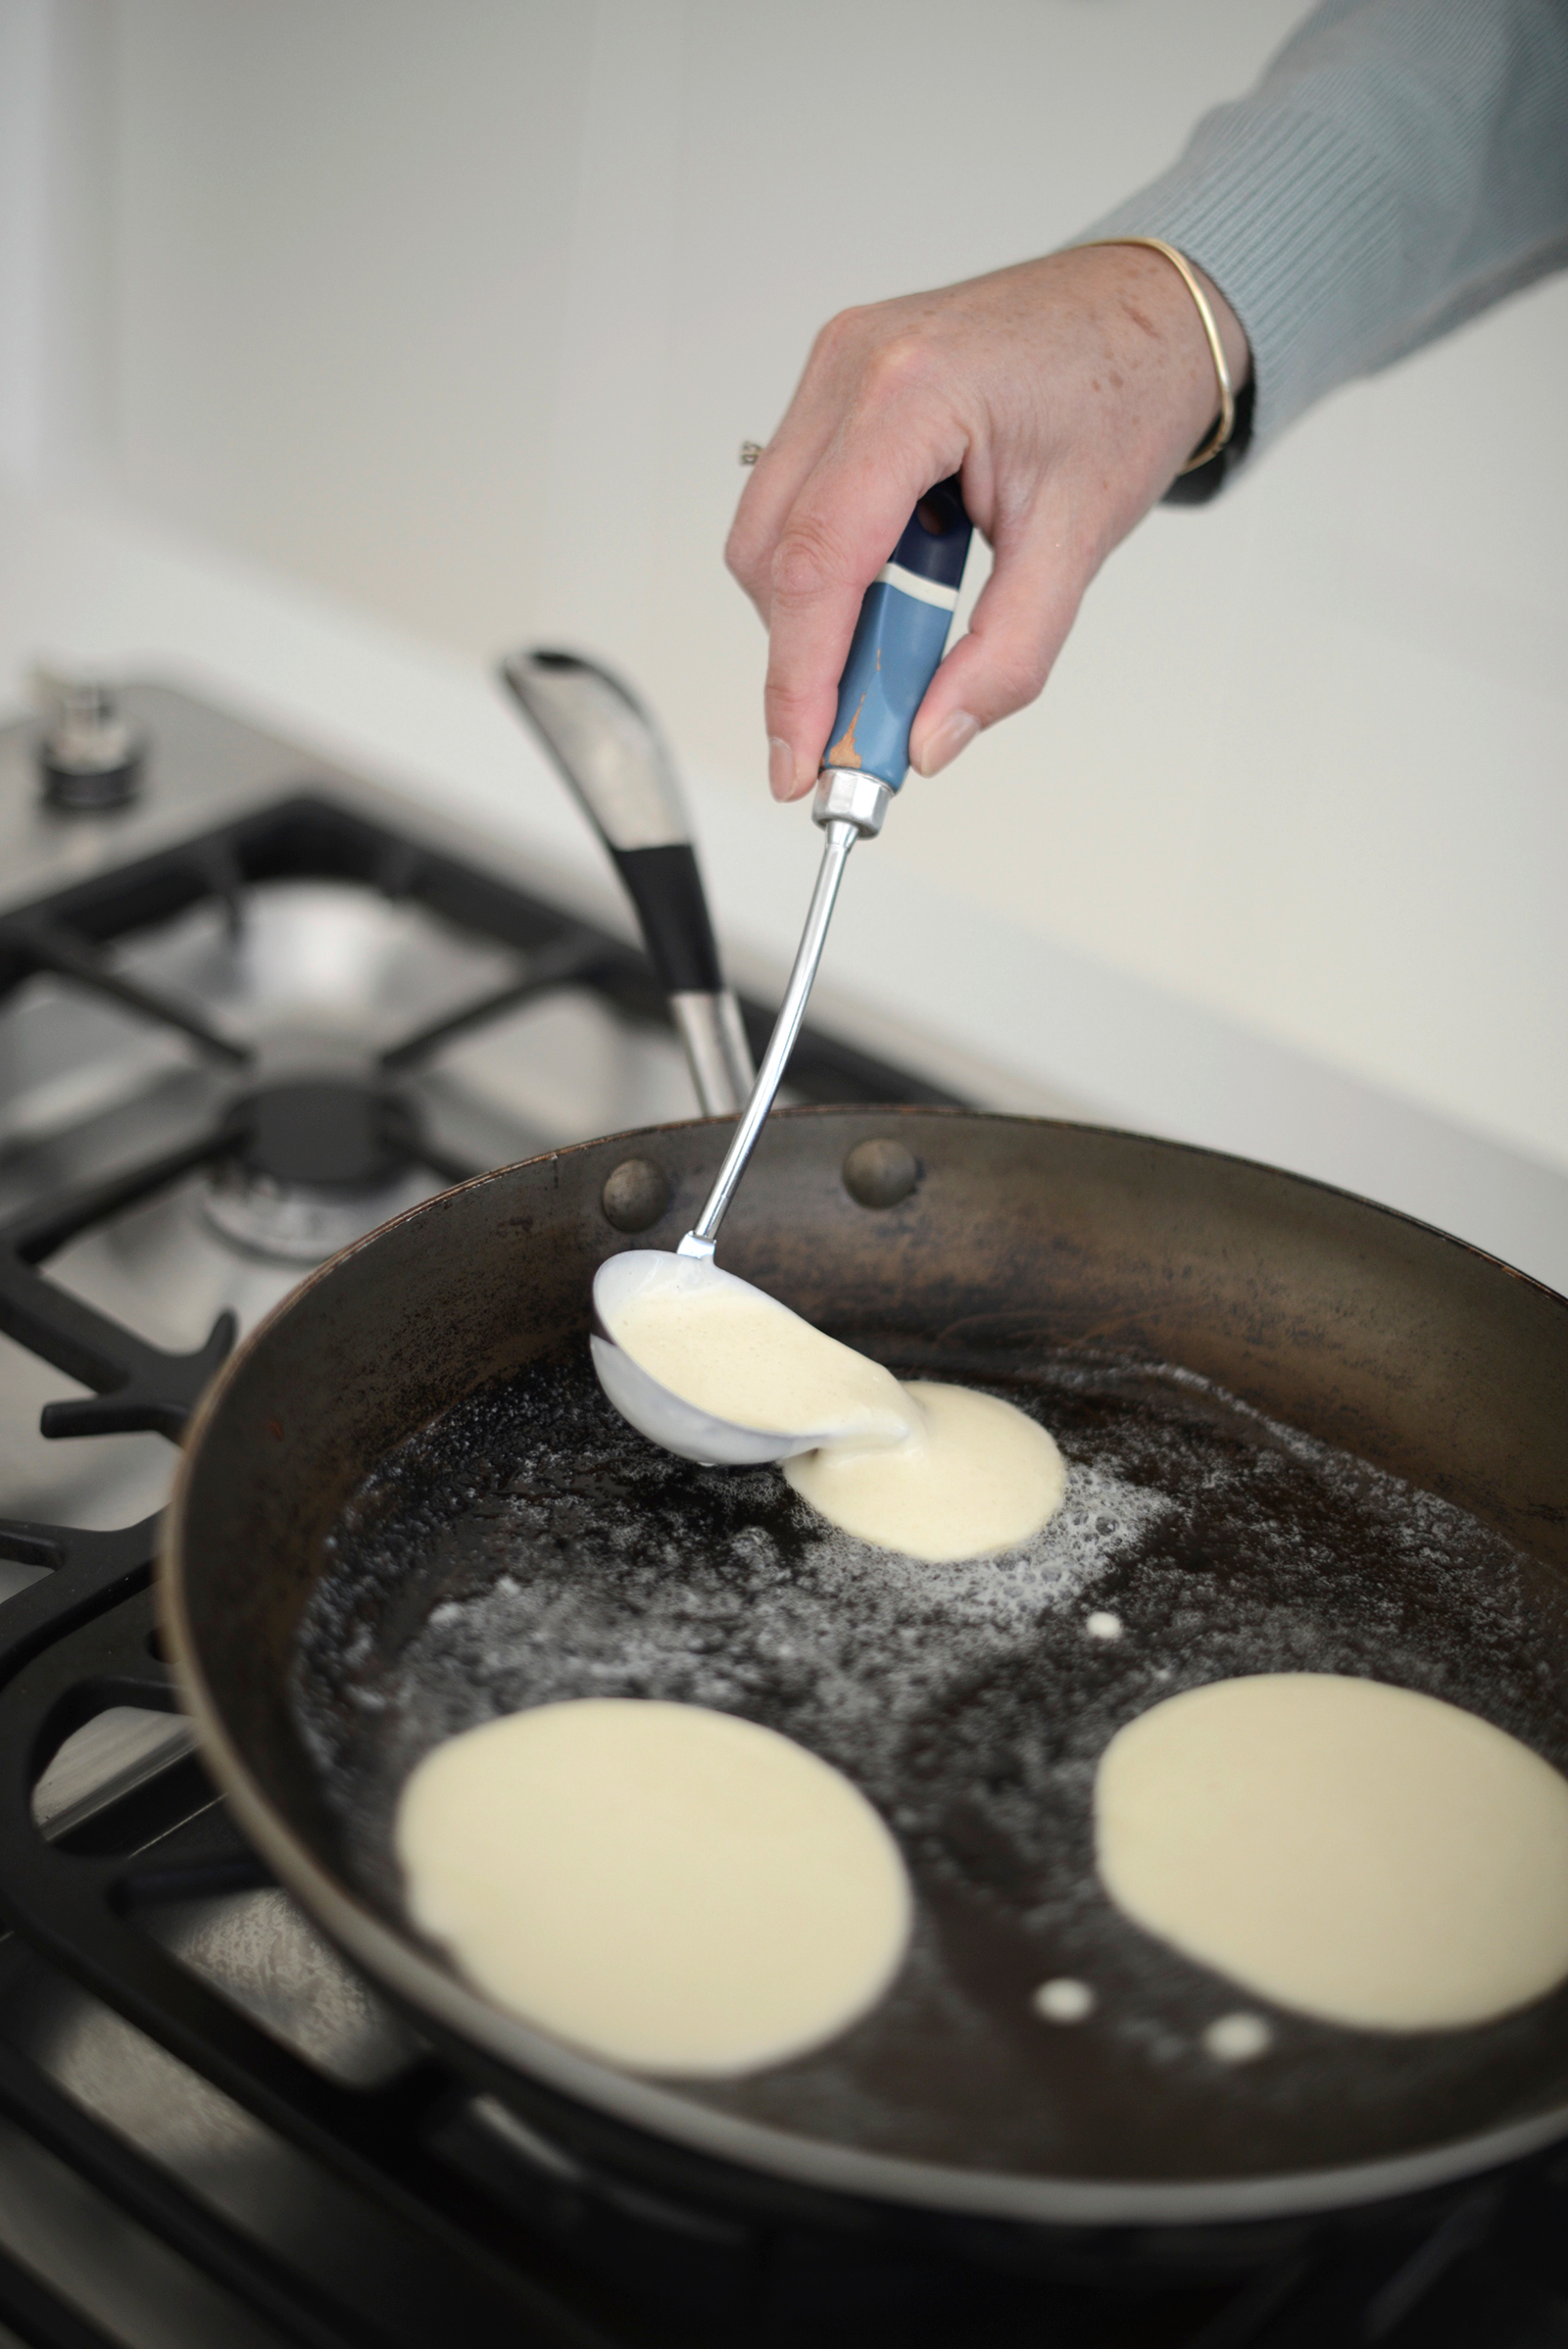 pancakes recipe